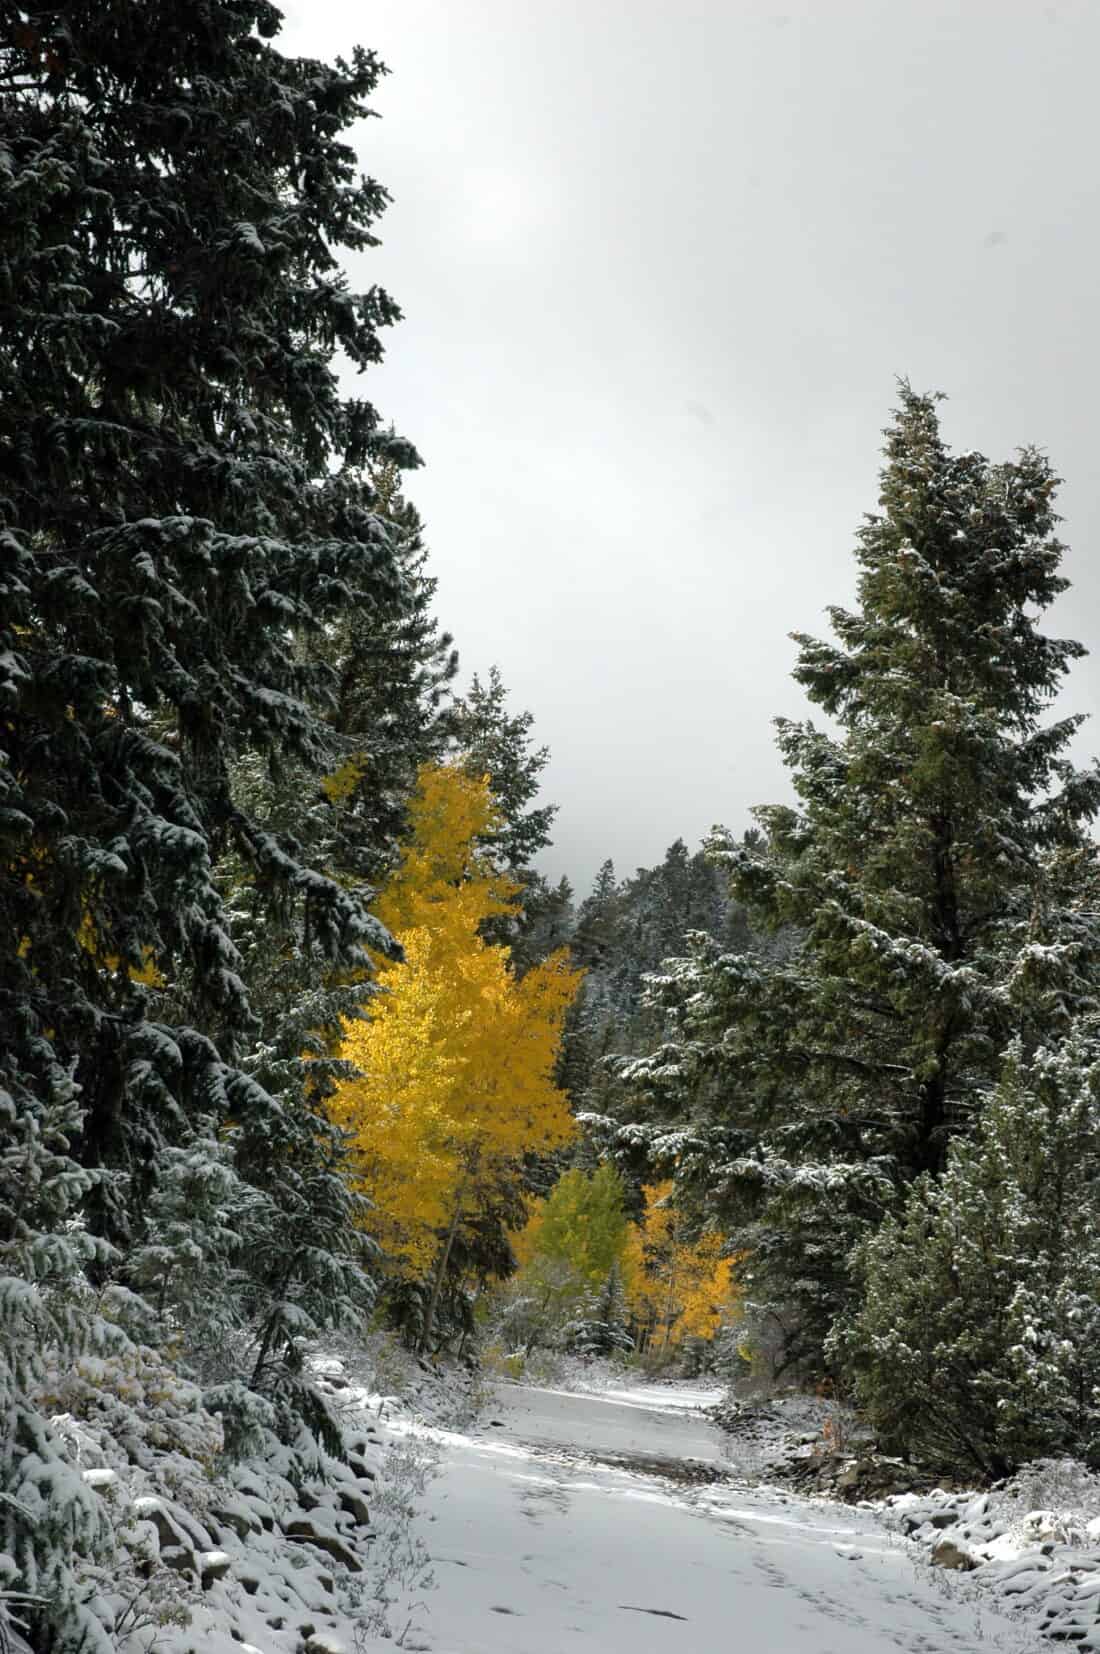 yellow aspen trees in a wooded snowy landscape